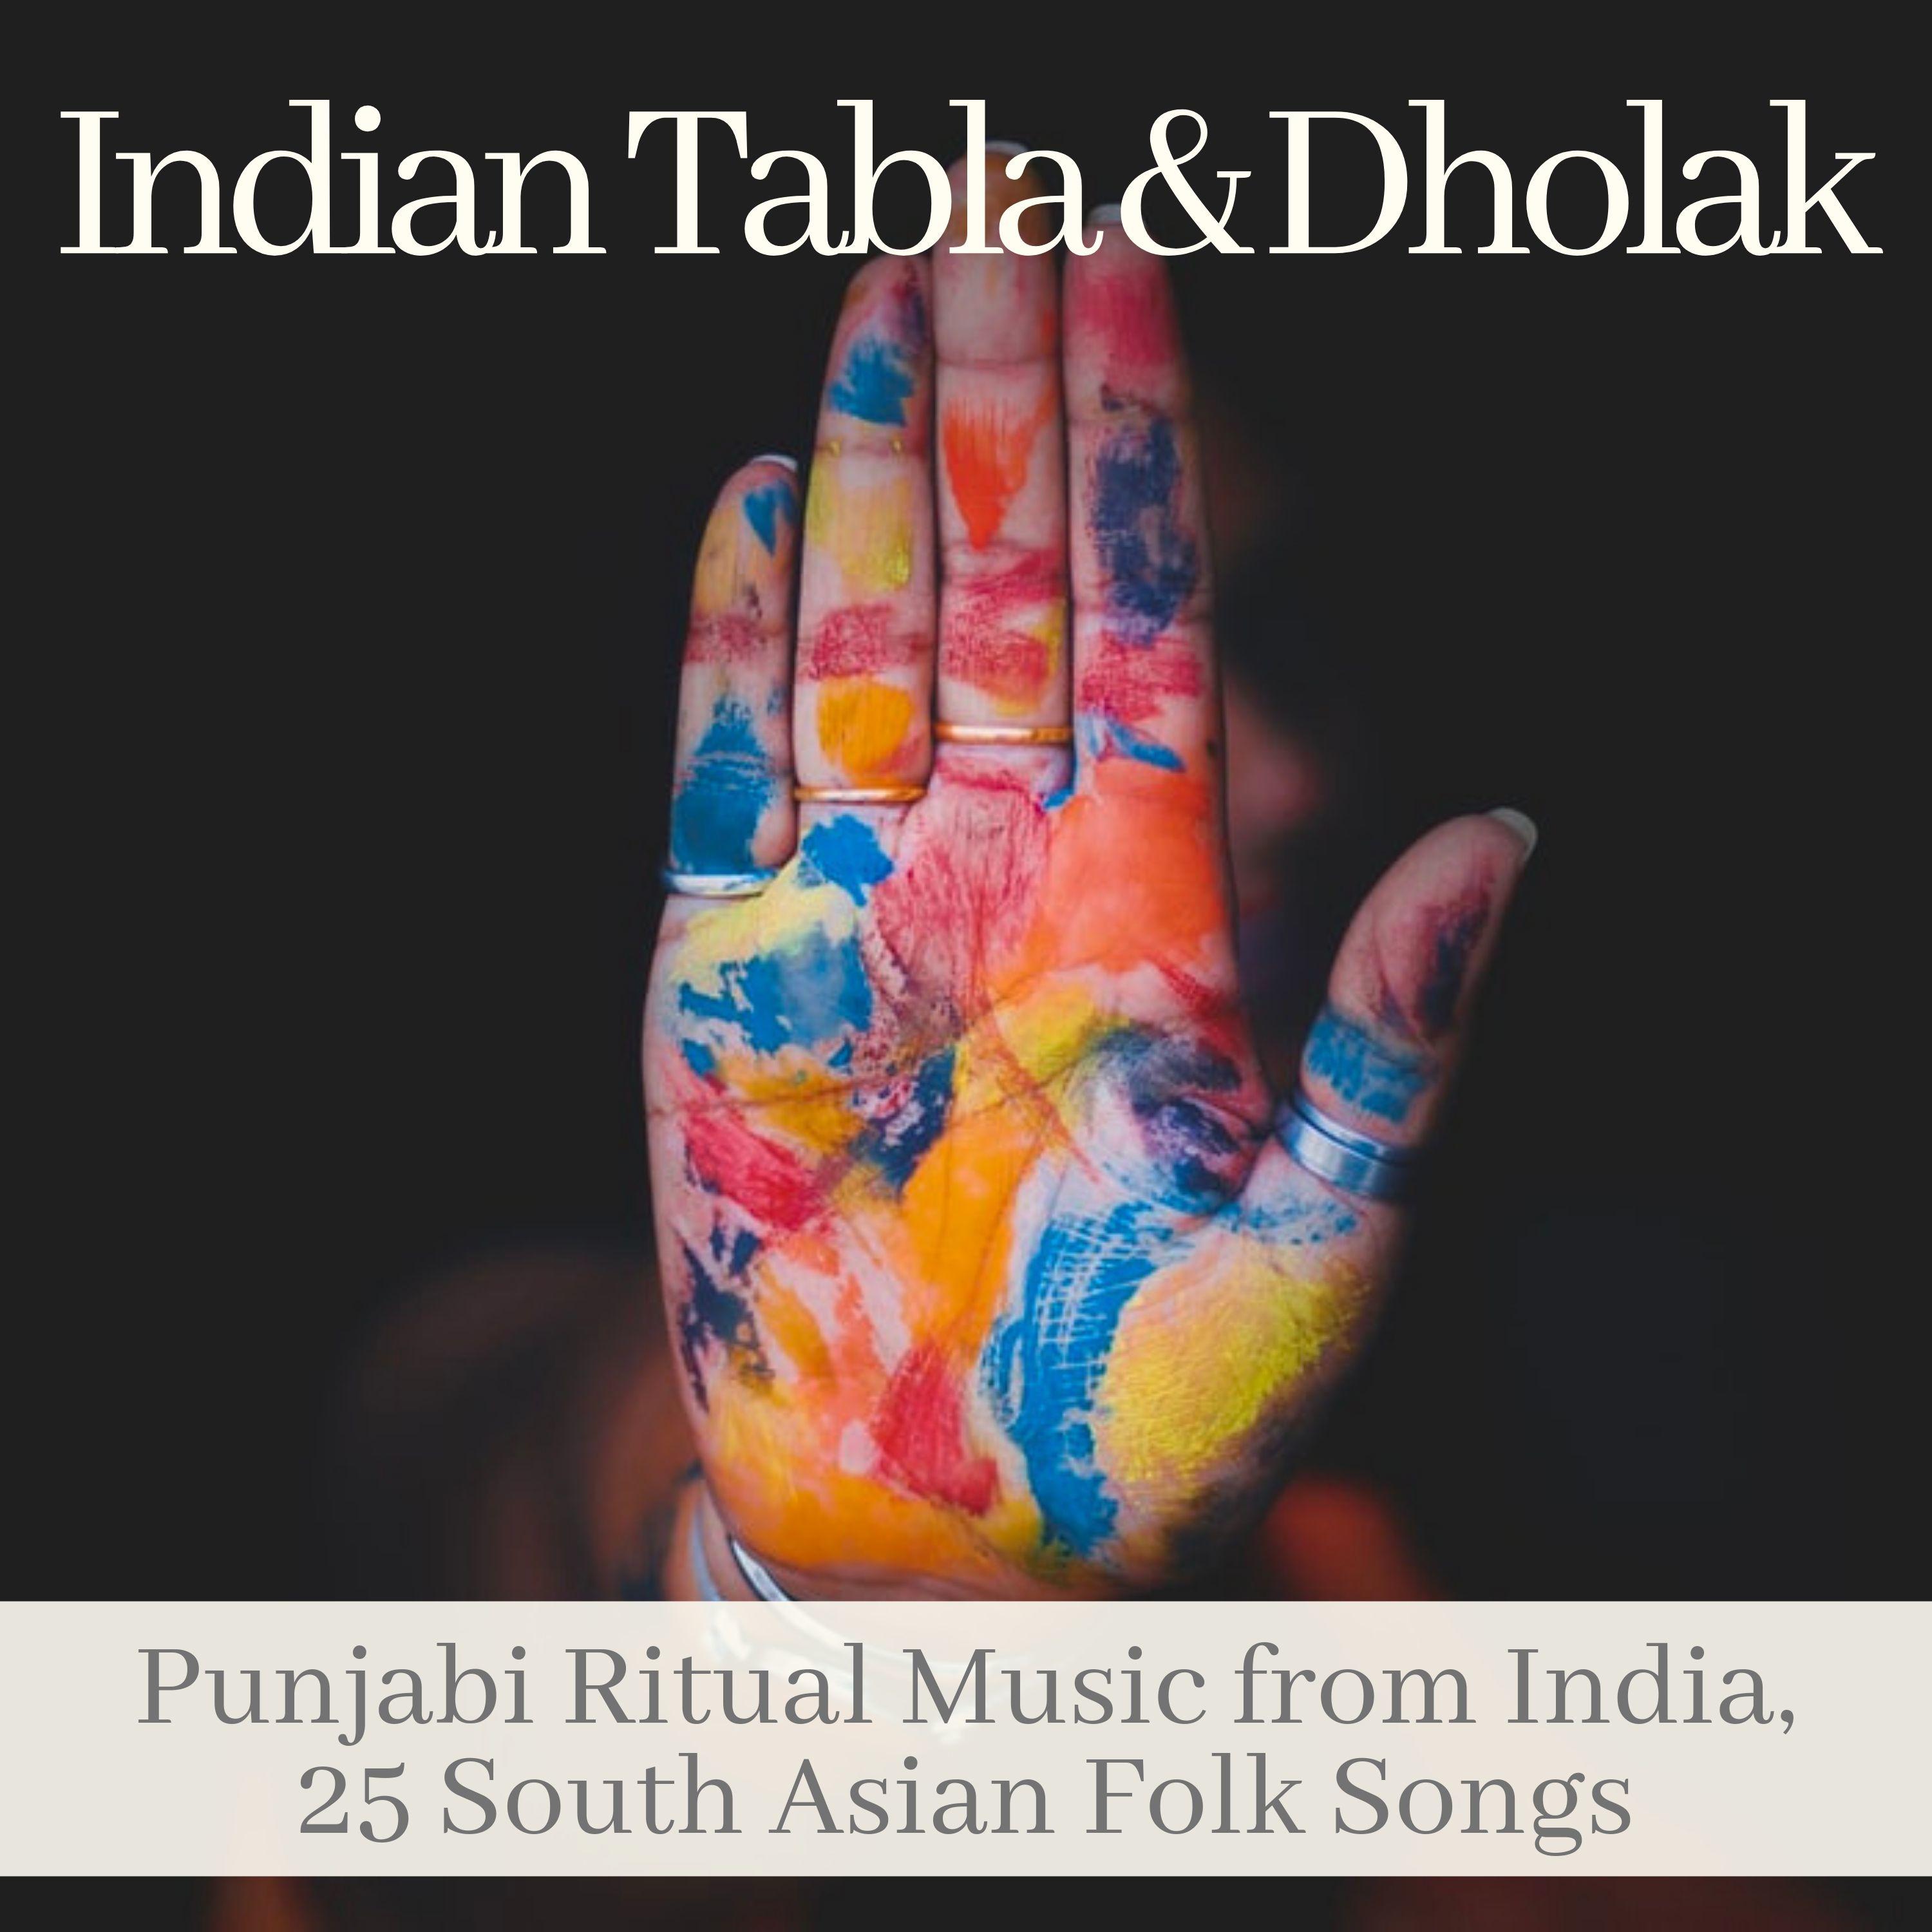 Indian Tabla & Dholak - Punjabi Ritual Music from India, 25 South Asian Folk Songs